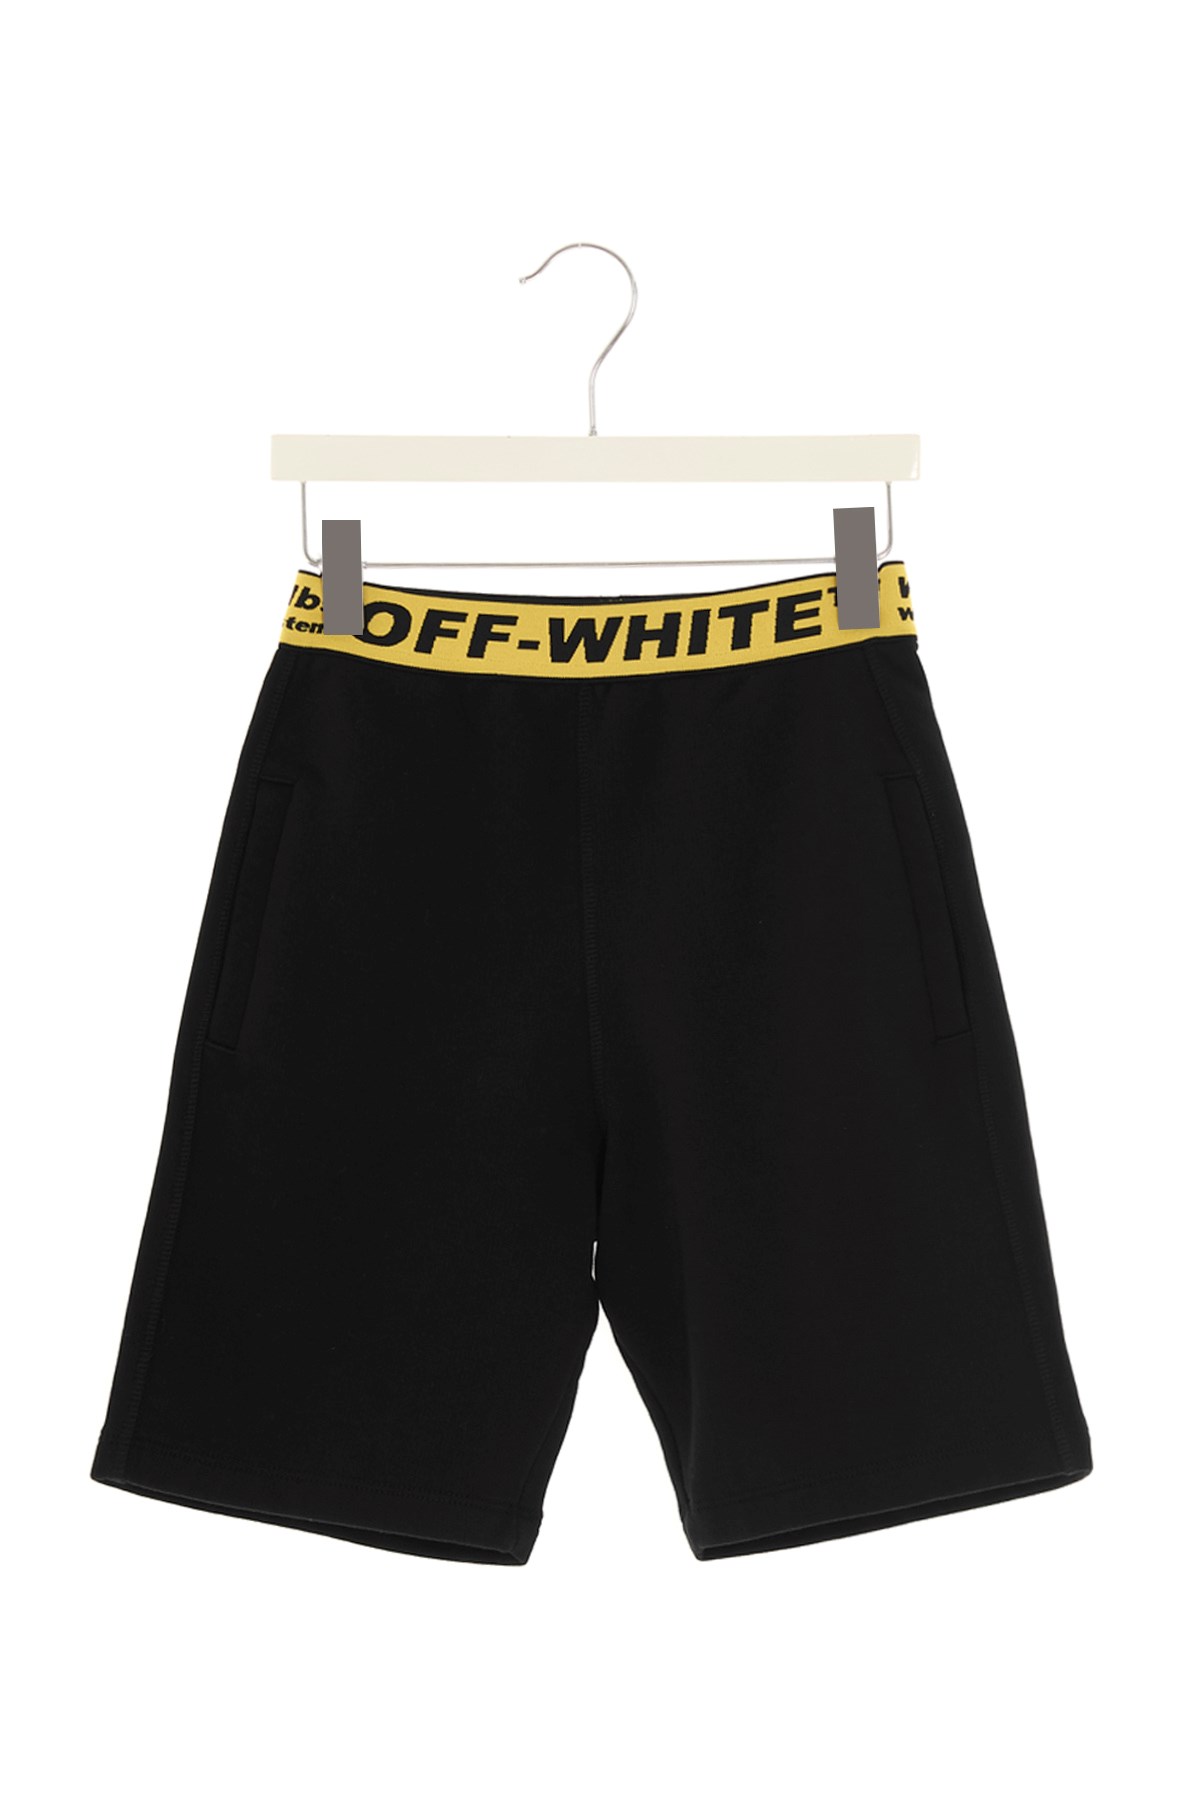 OFF-WHITE Bermuda-Shorts 'Industrial'